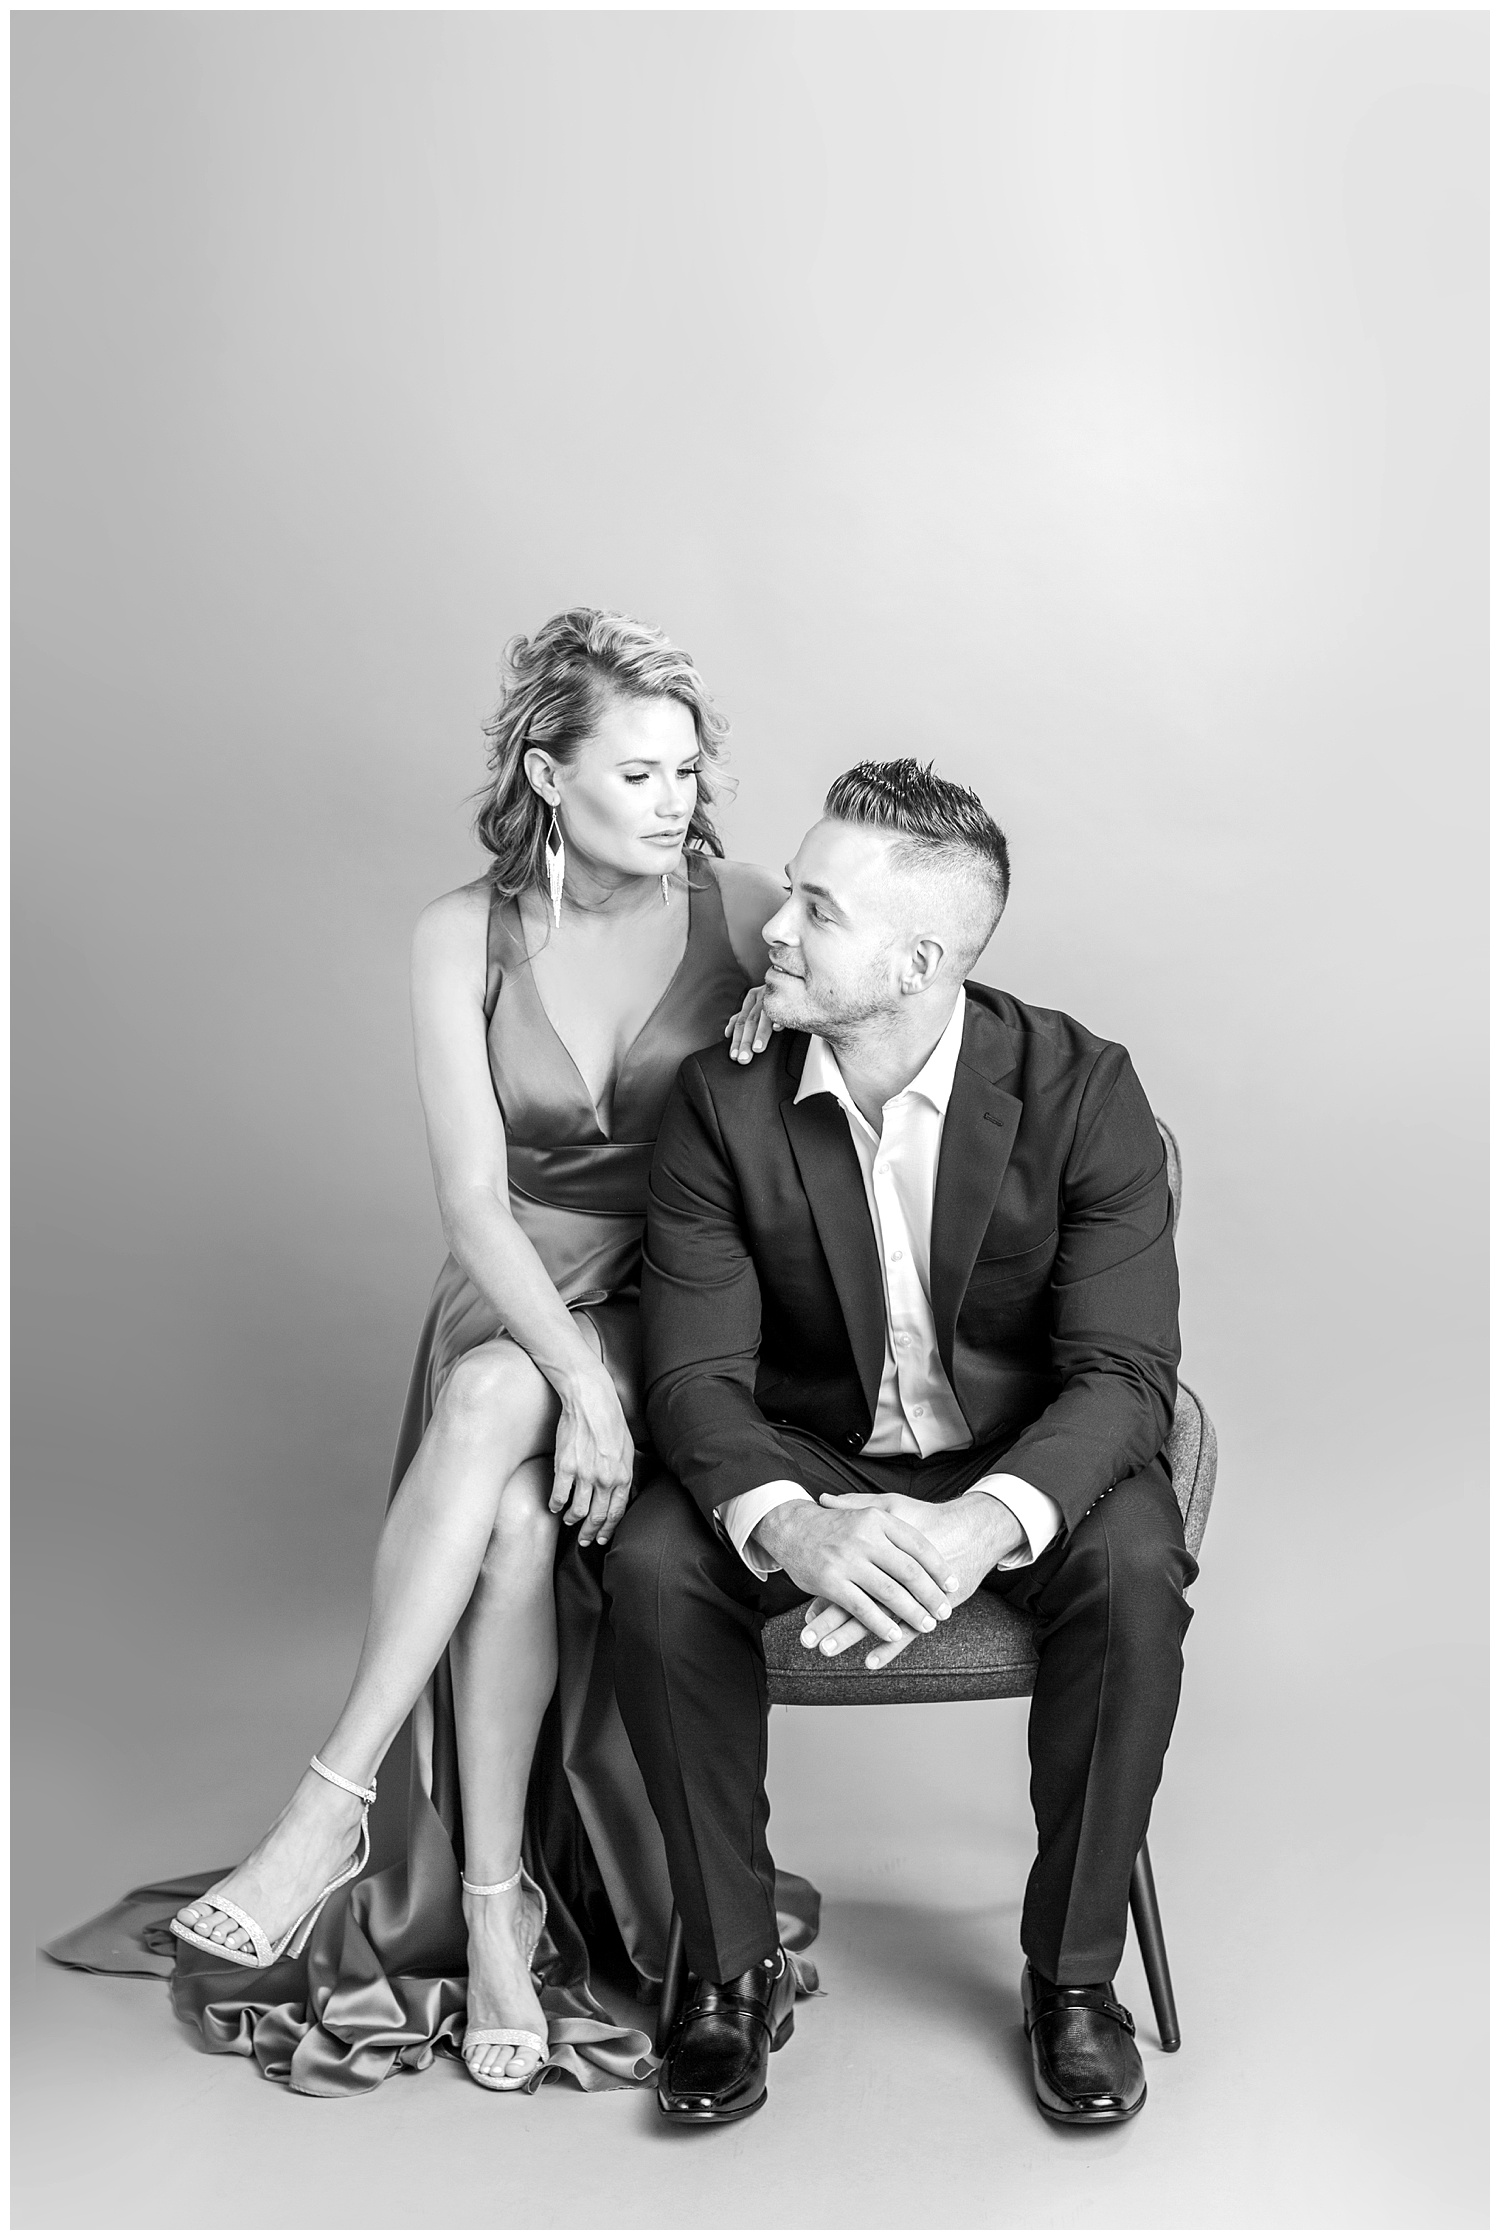 Glamorous Vanity Fair cover model couple pose in high fashion formal attire | Iowa Wedding Photographer